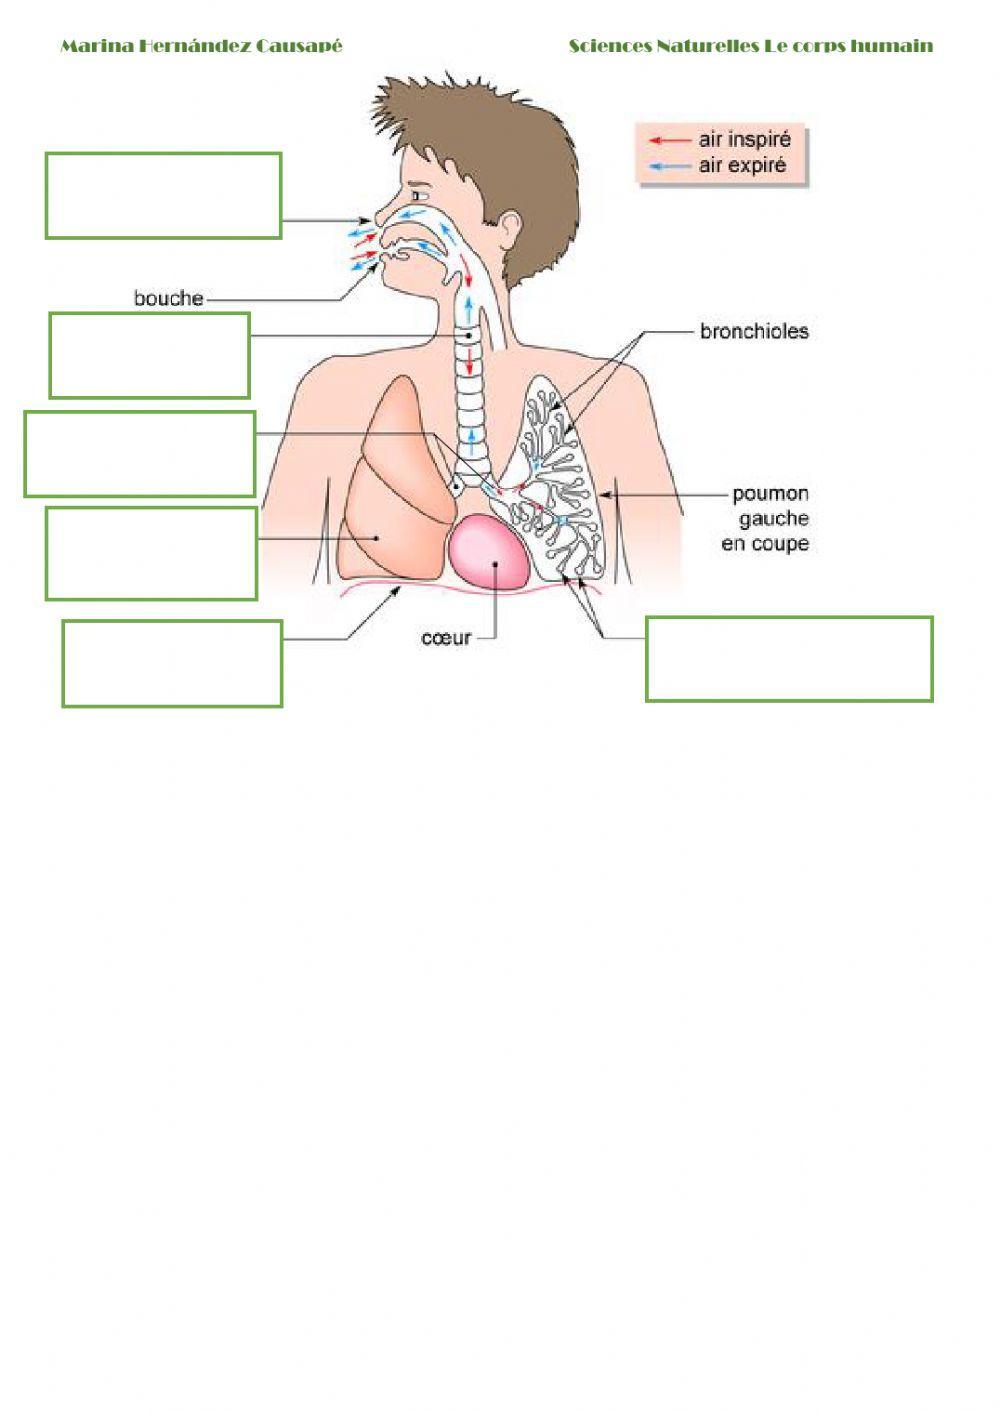 L'appareil respiratoire